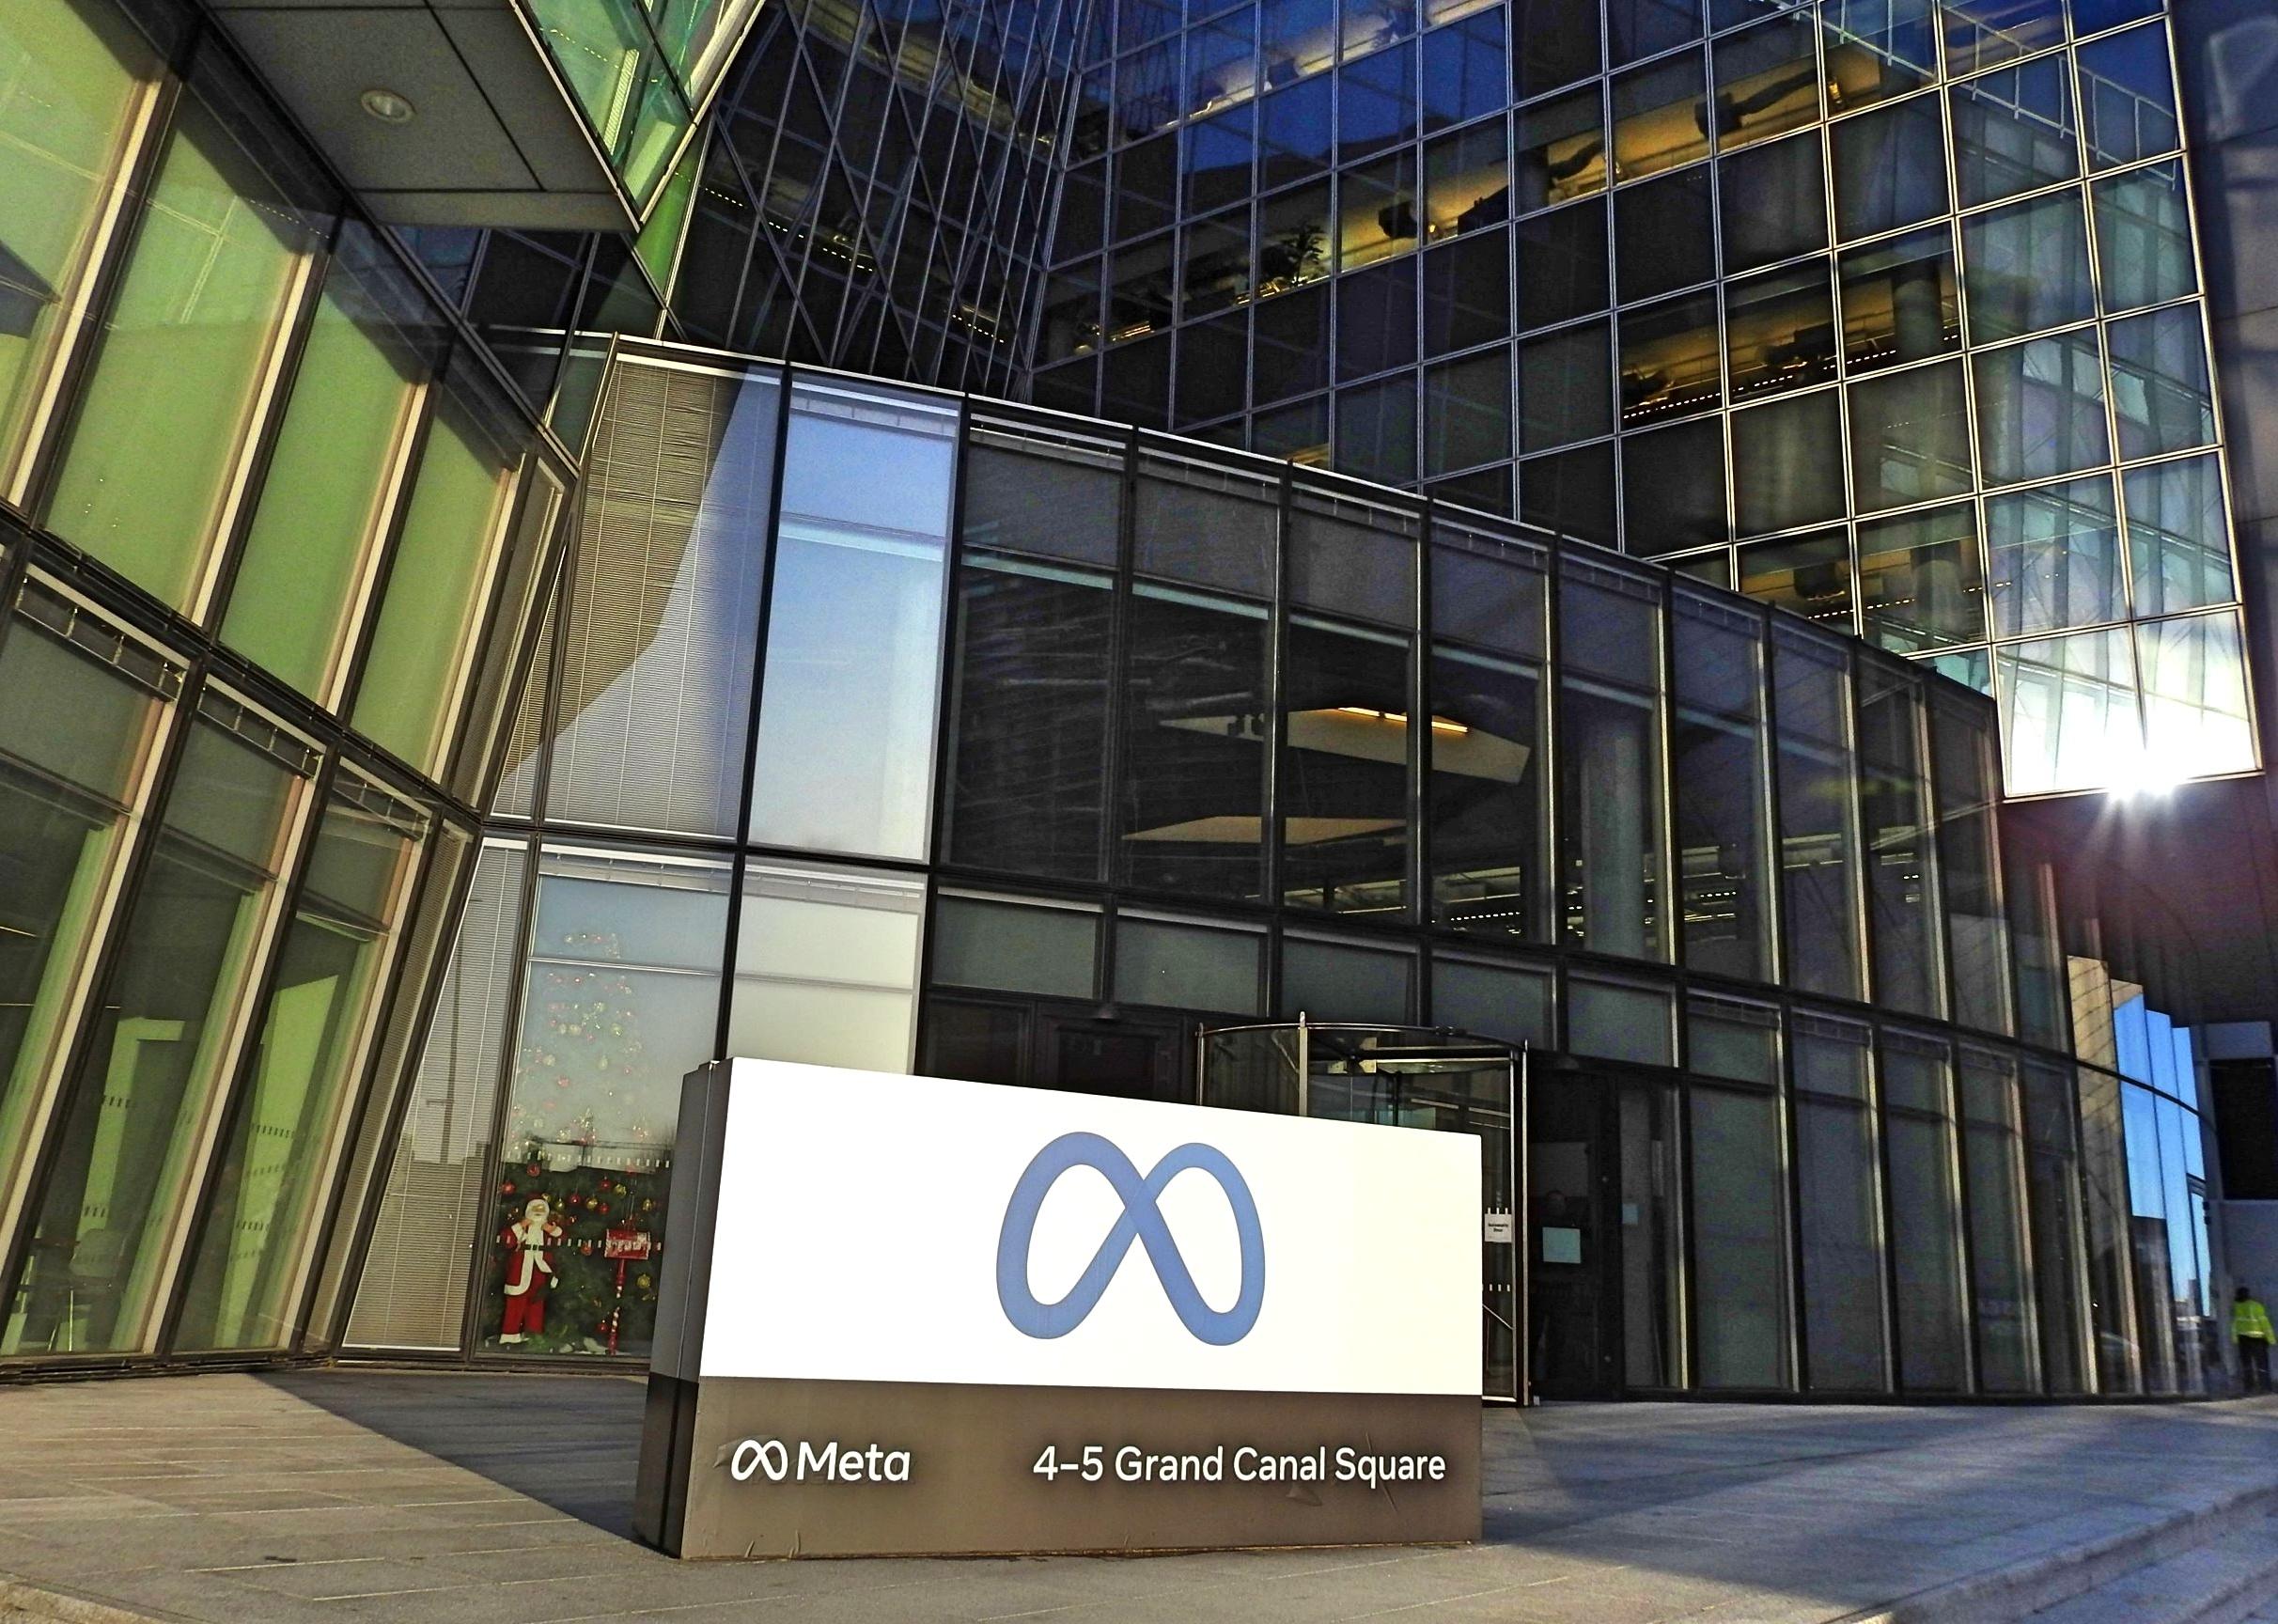 The new Meta company signage outside its European headquarters.